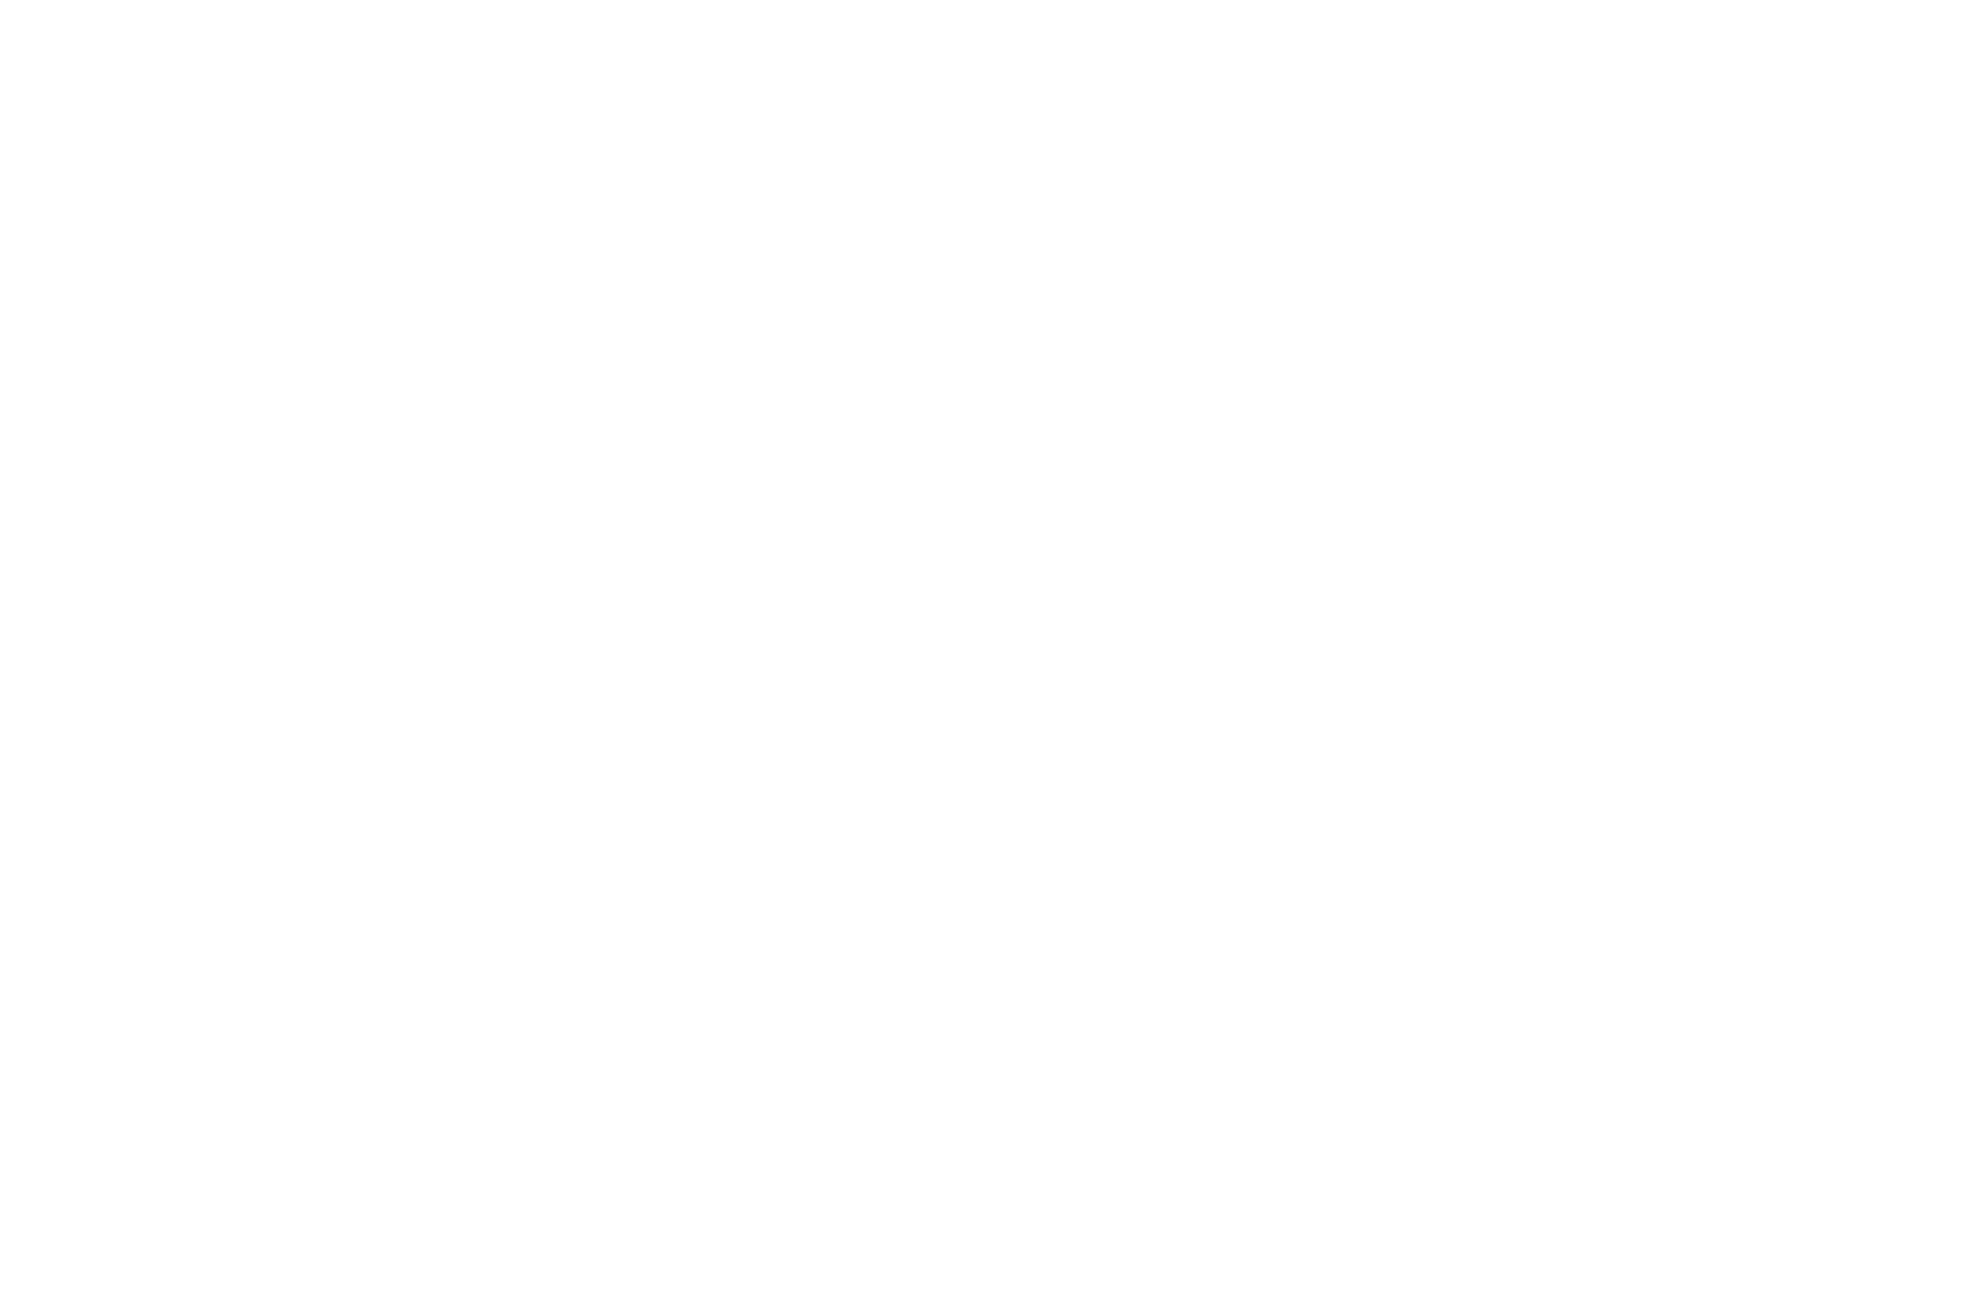 ACID Cannes 2021